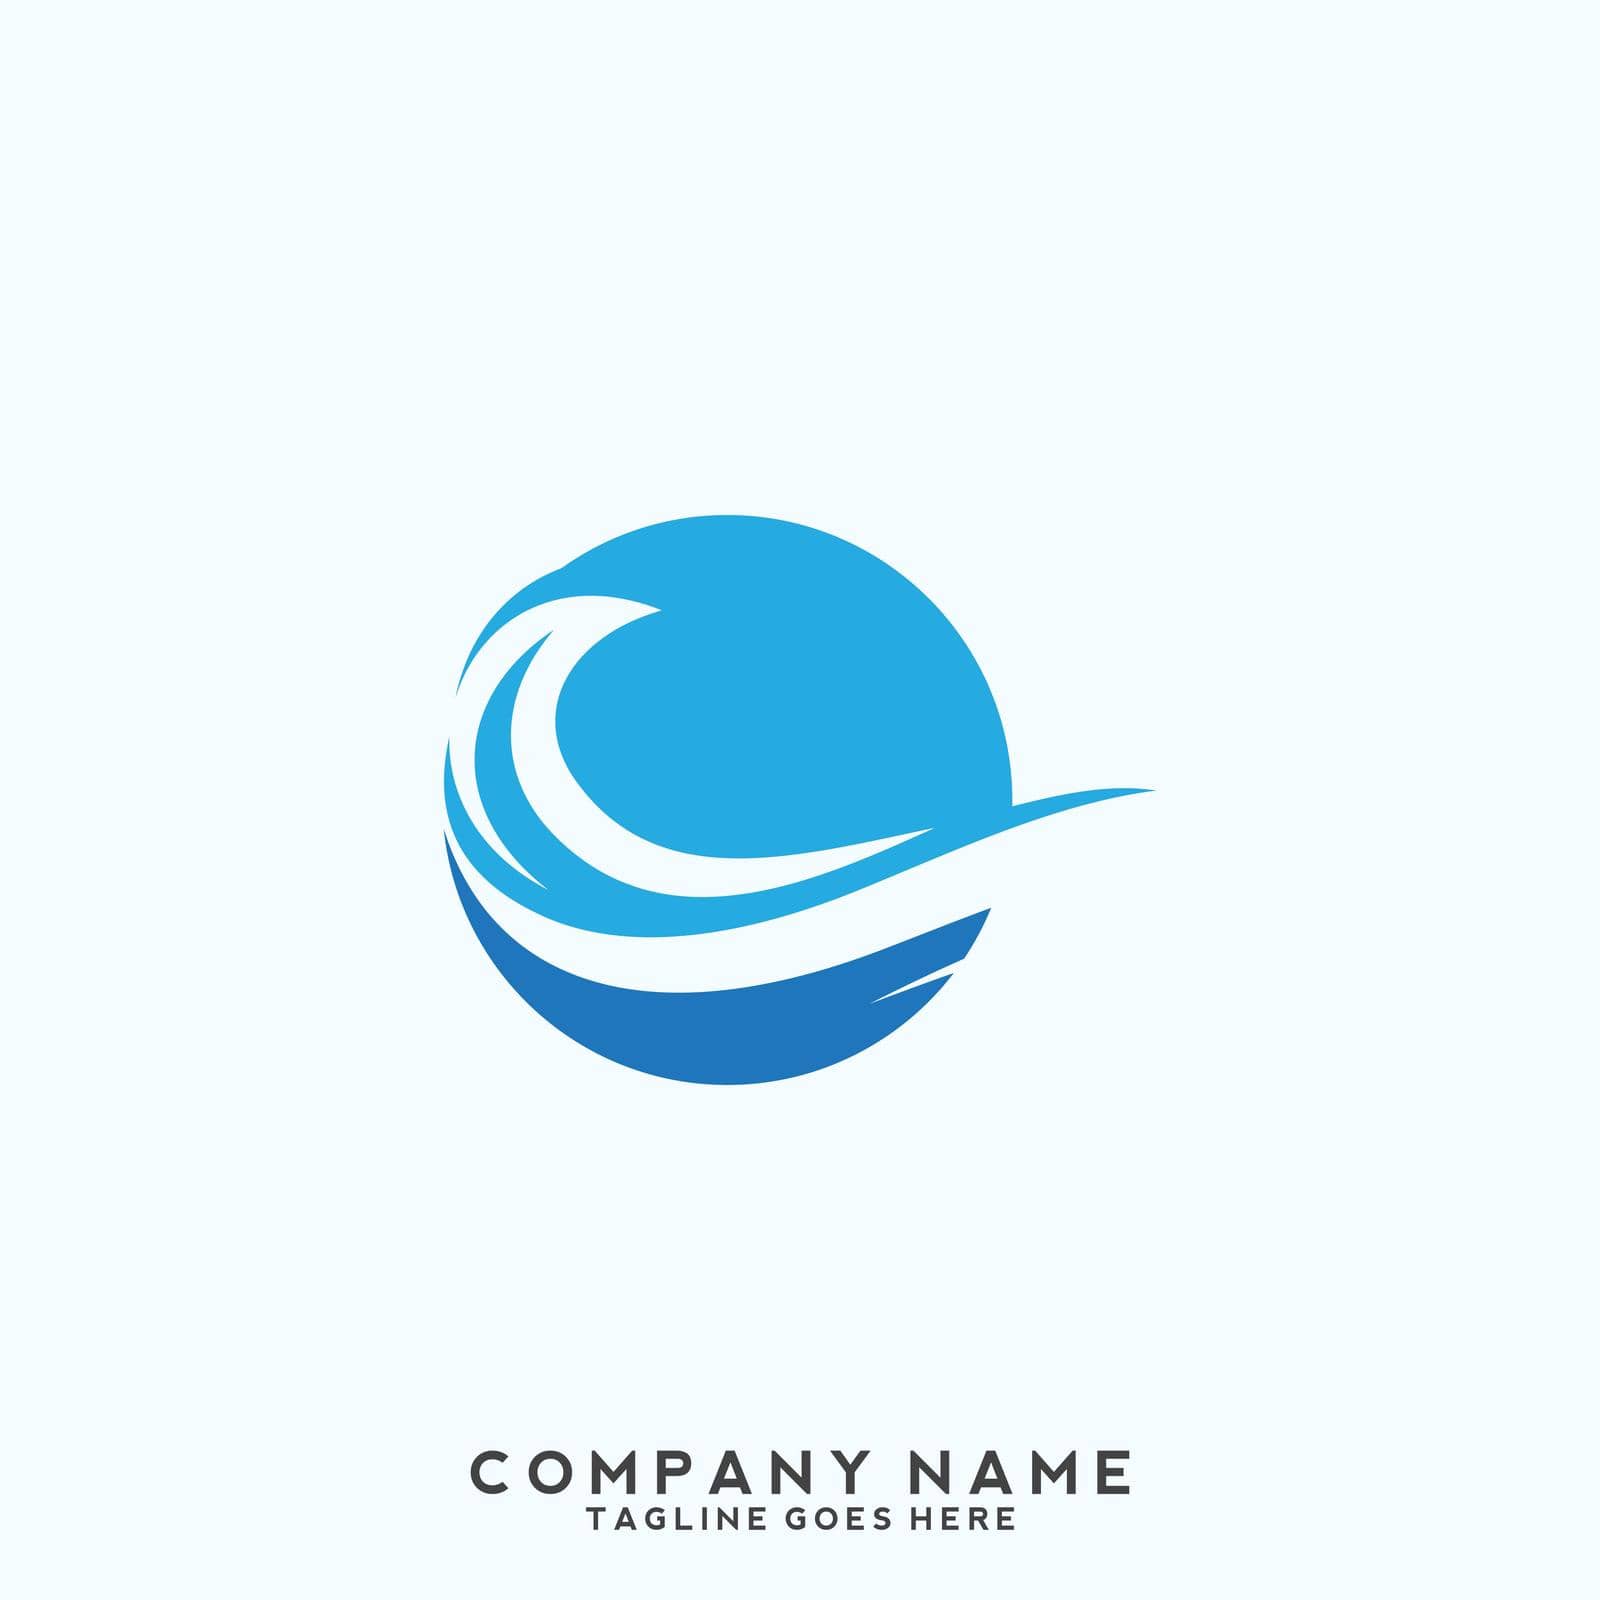 Aqua ,Water Wave symbol and icon Logo Template vector